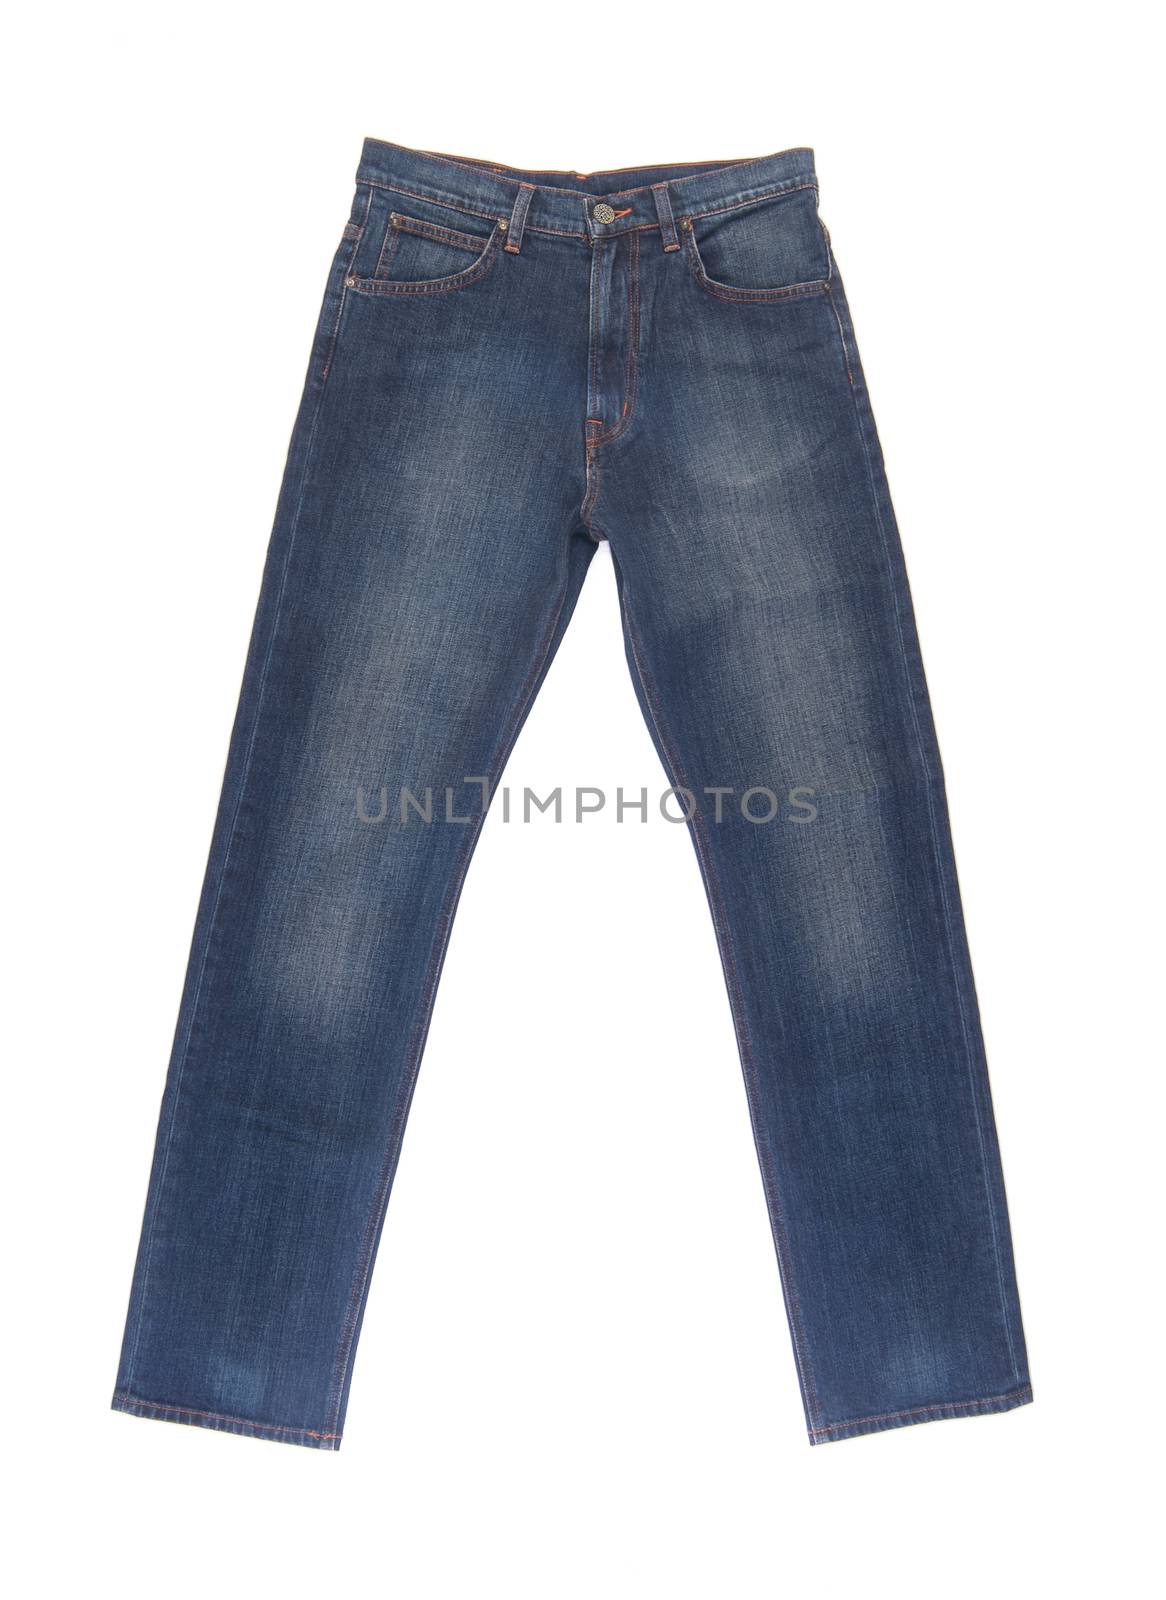 Jeans. Blue Jeans on a background by heinteh